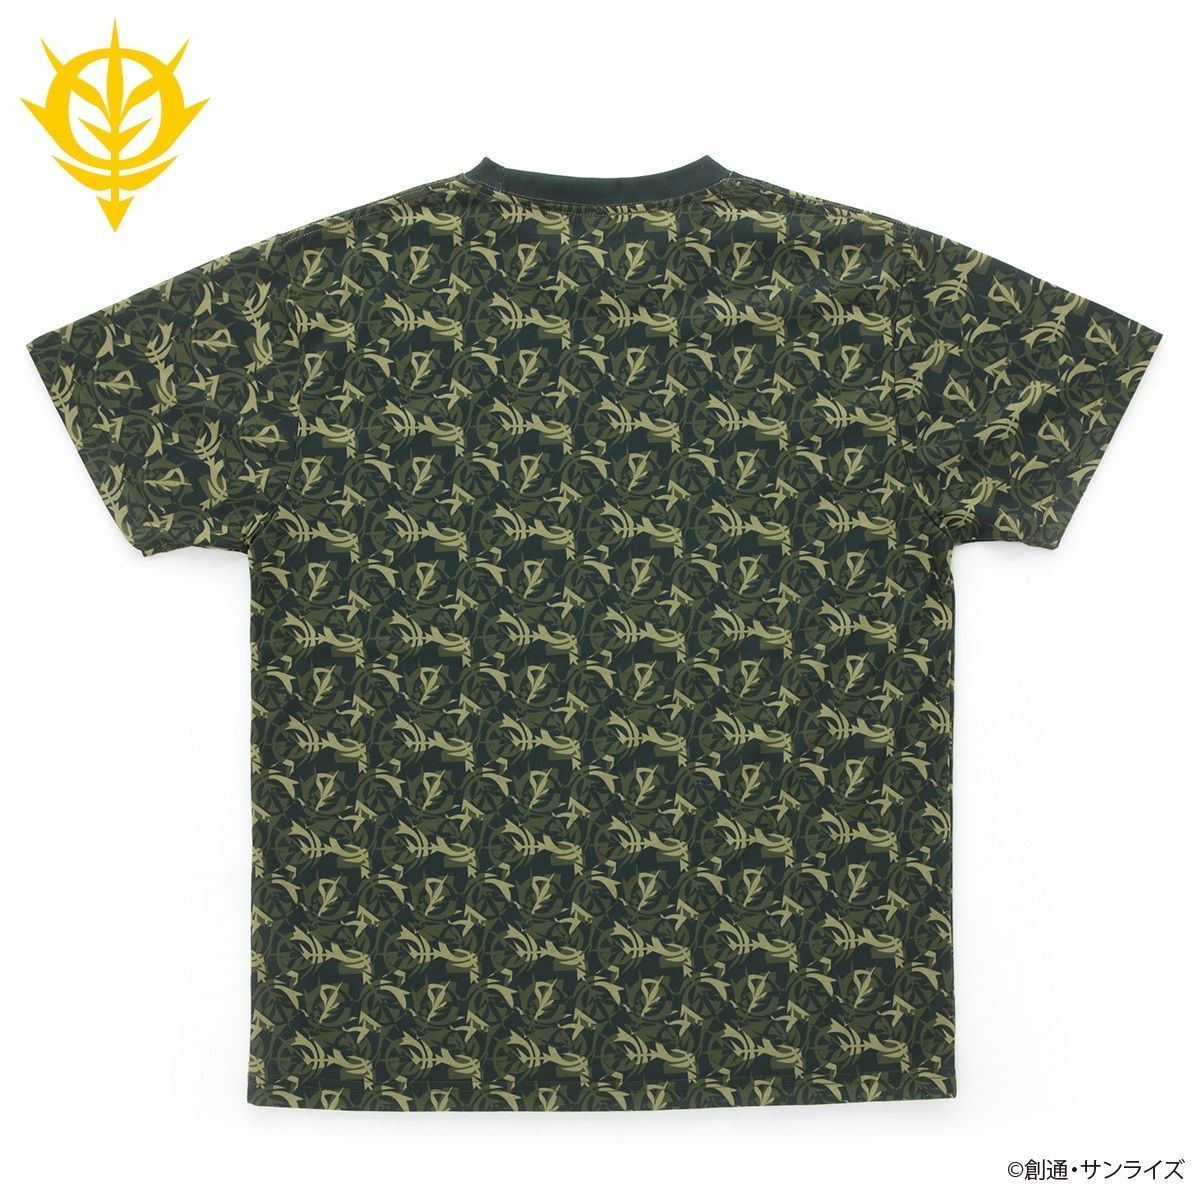 Mobile Suit Gundam Camouflage T-shirt